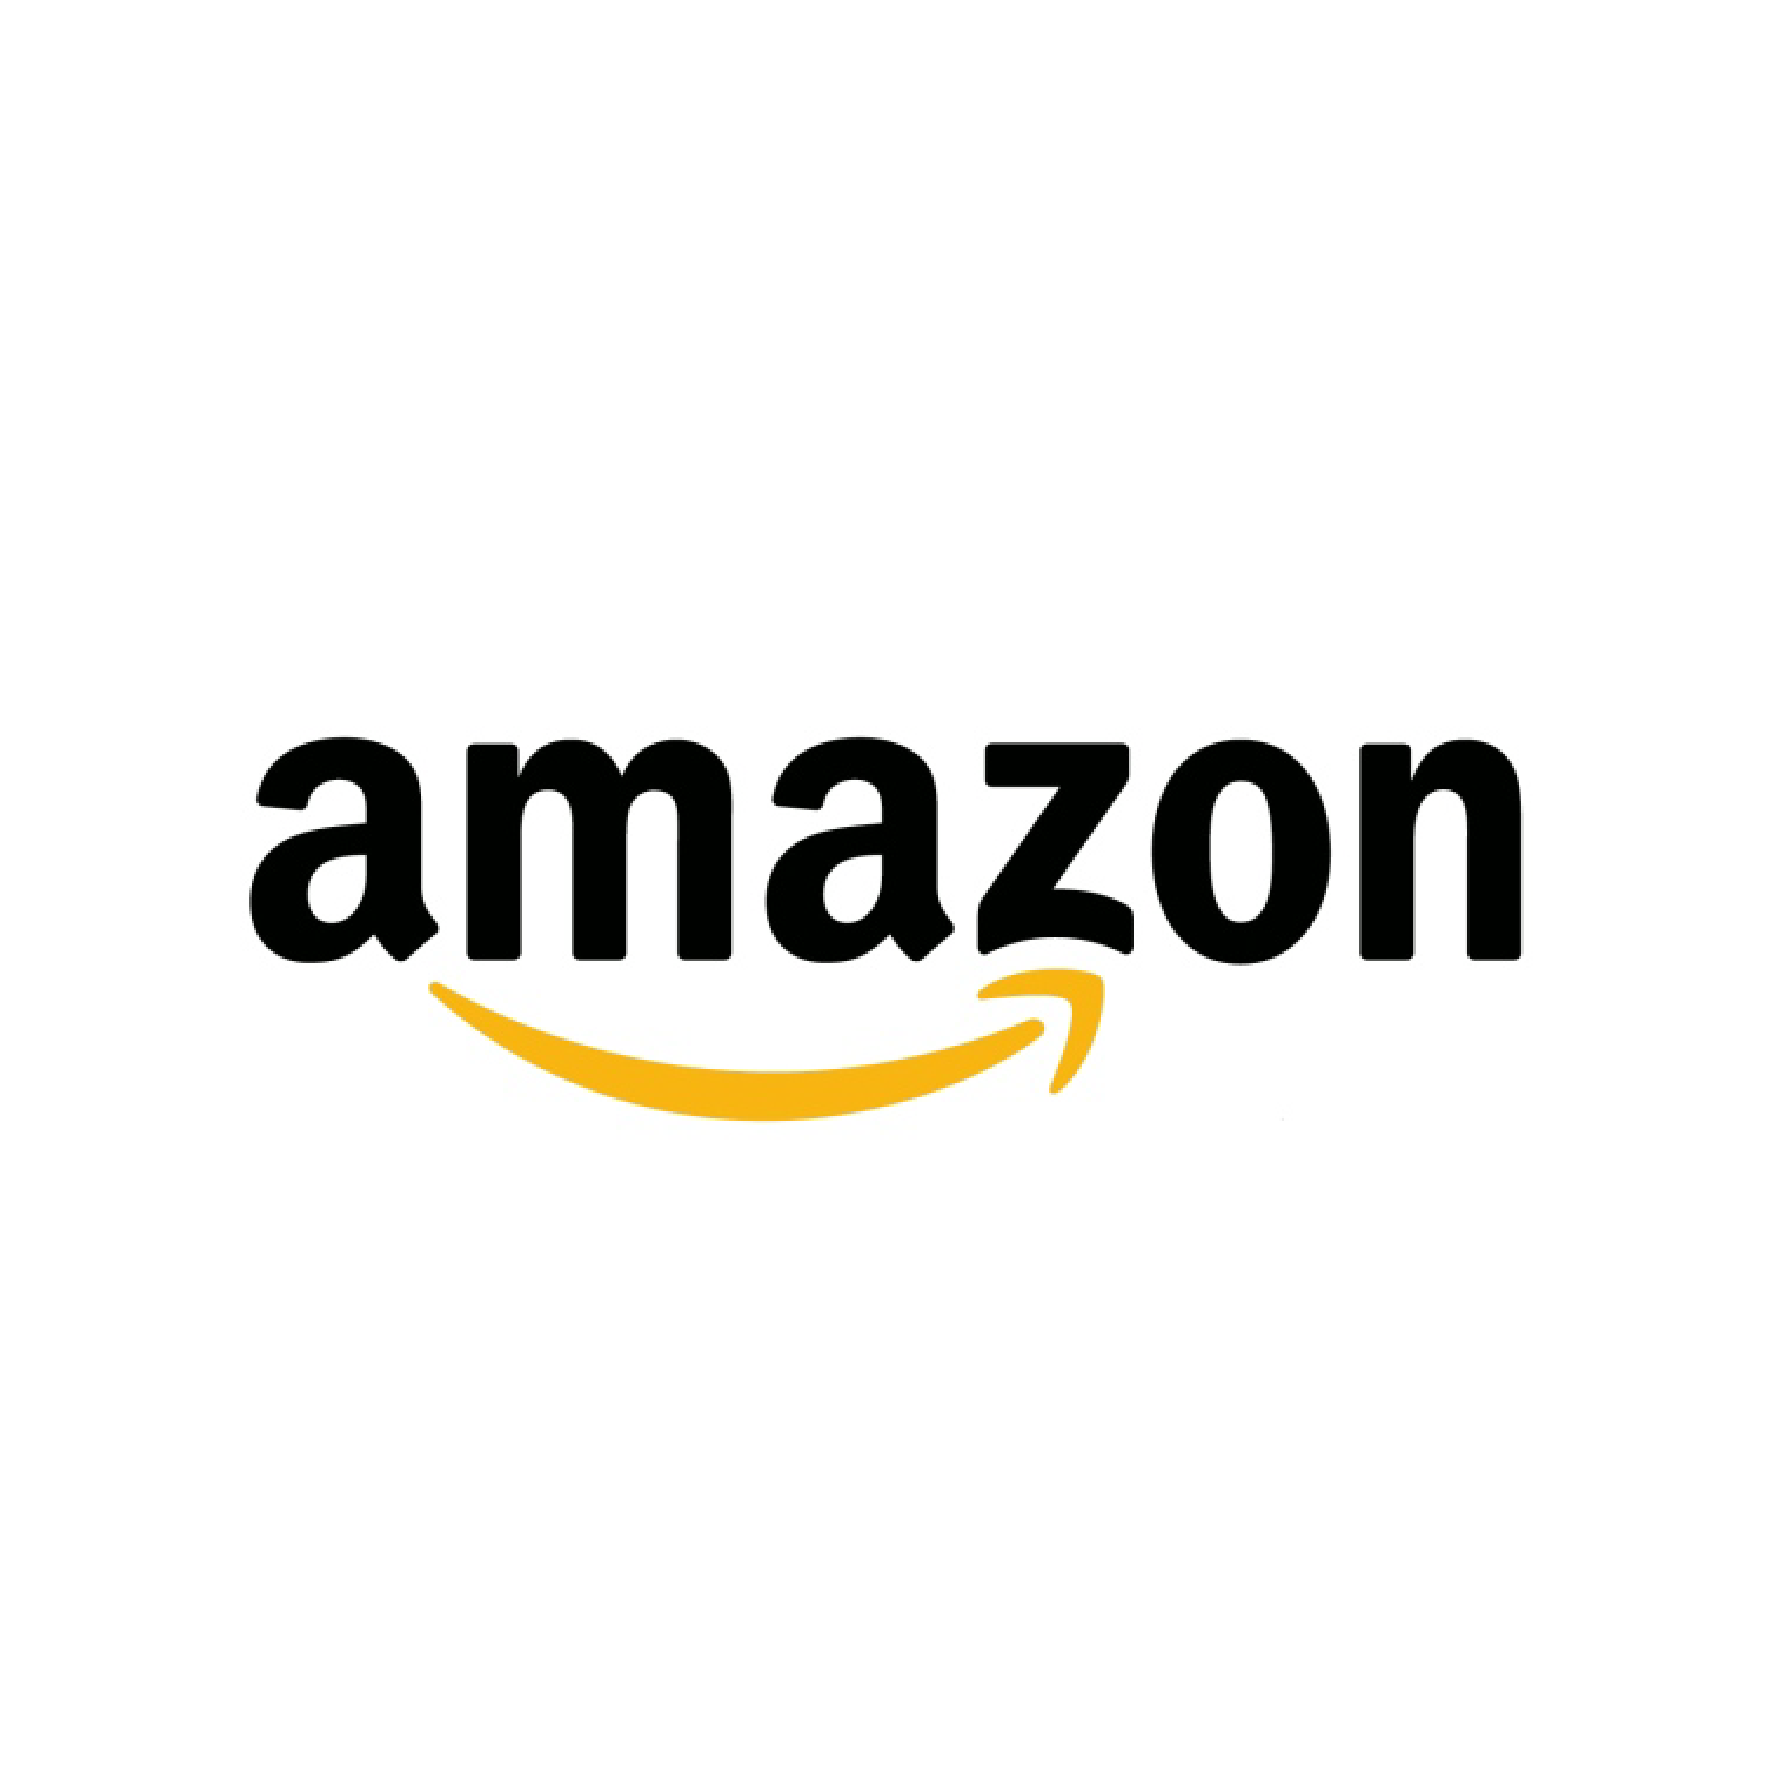 Amazon logo Wallpaper